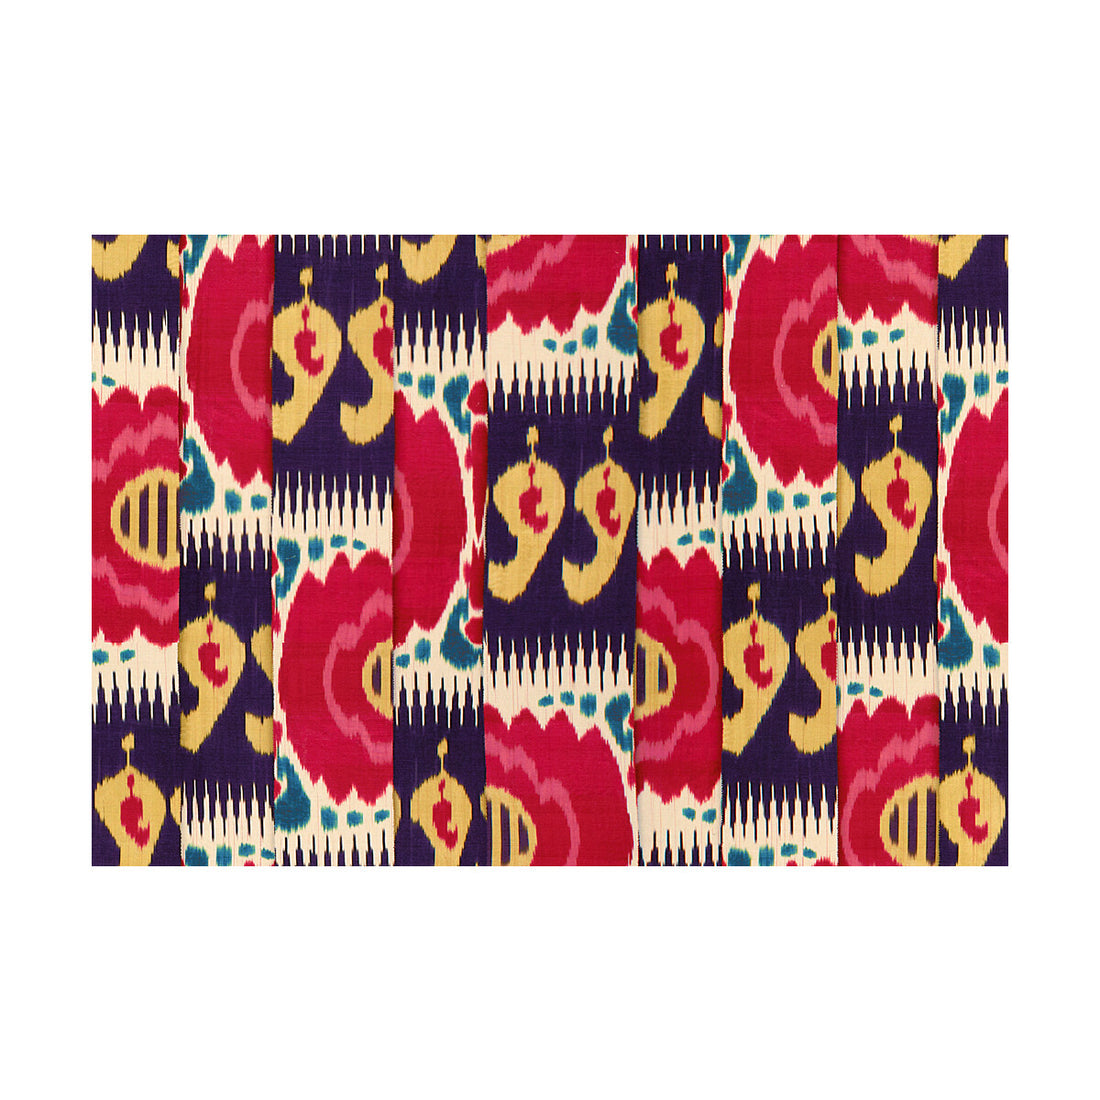 Megalli fabric in currants color - pattern MEGALLI.910.0 - by Kravet Design